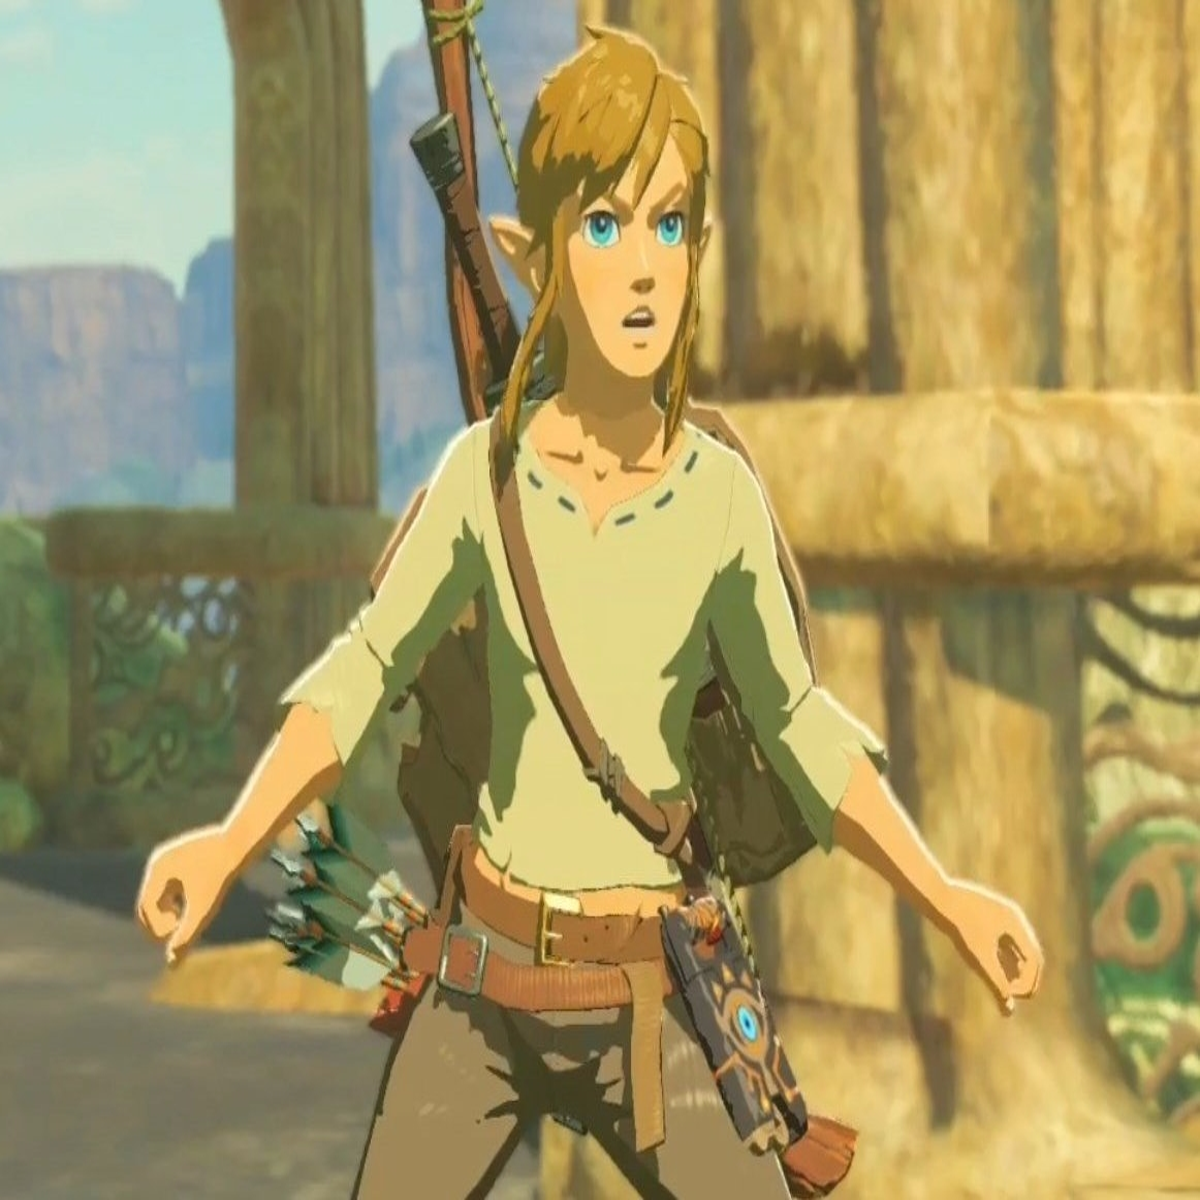 The Legend of Zelda: Breath of the Wild (Switch/Wii U): os 10